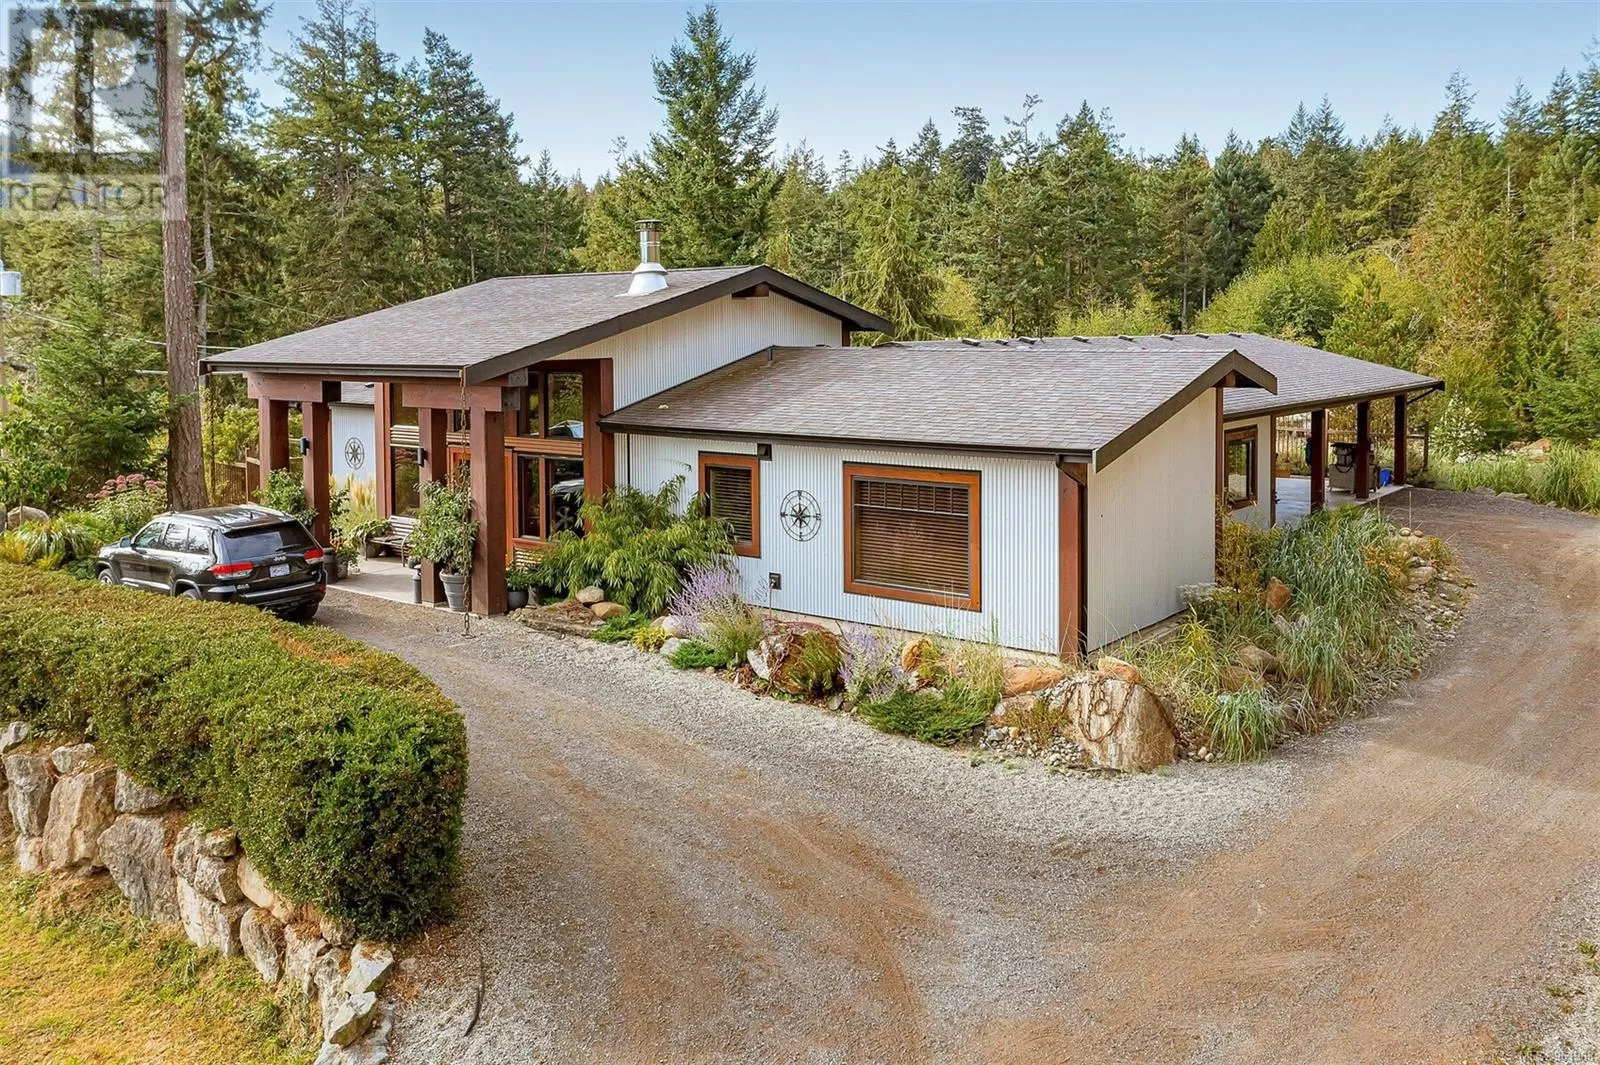 House for rent: 6340 Quail Peak Pl, Sooke, British Columbia V9Z 1A9